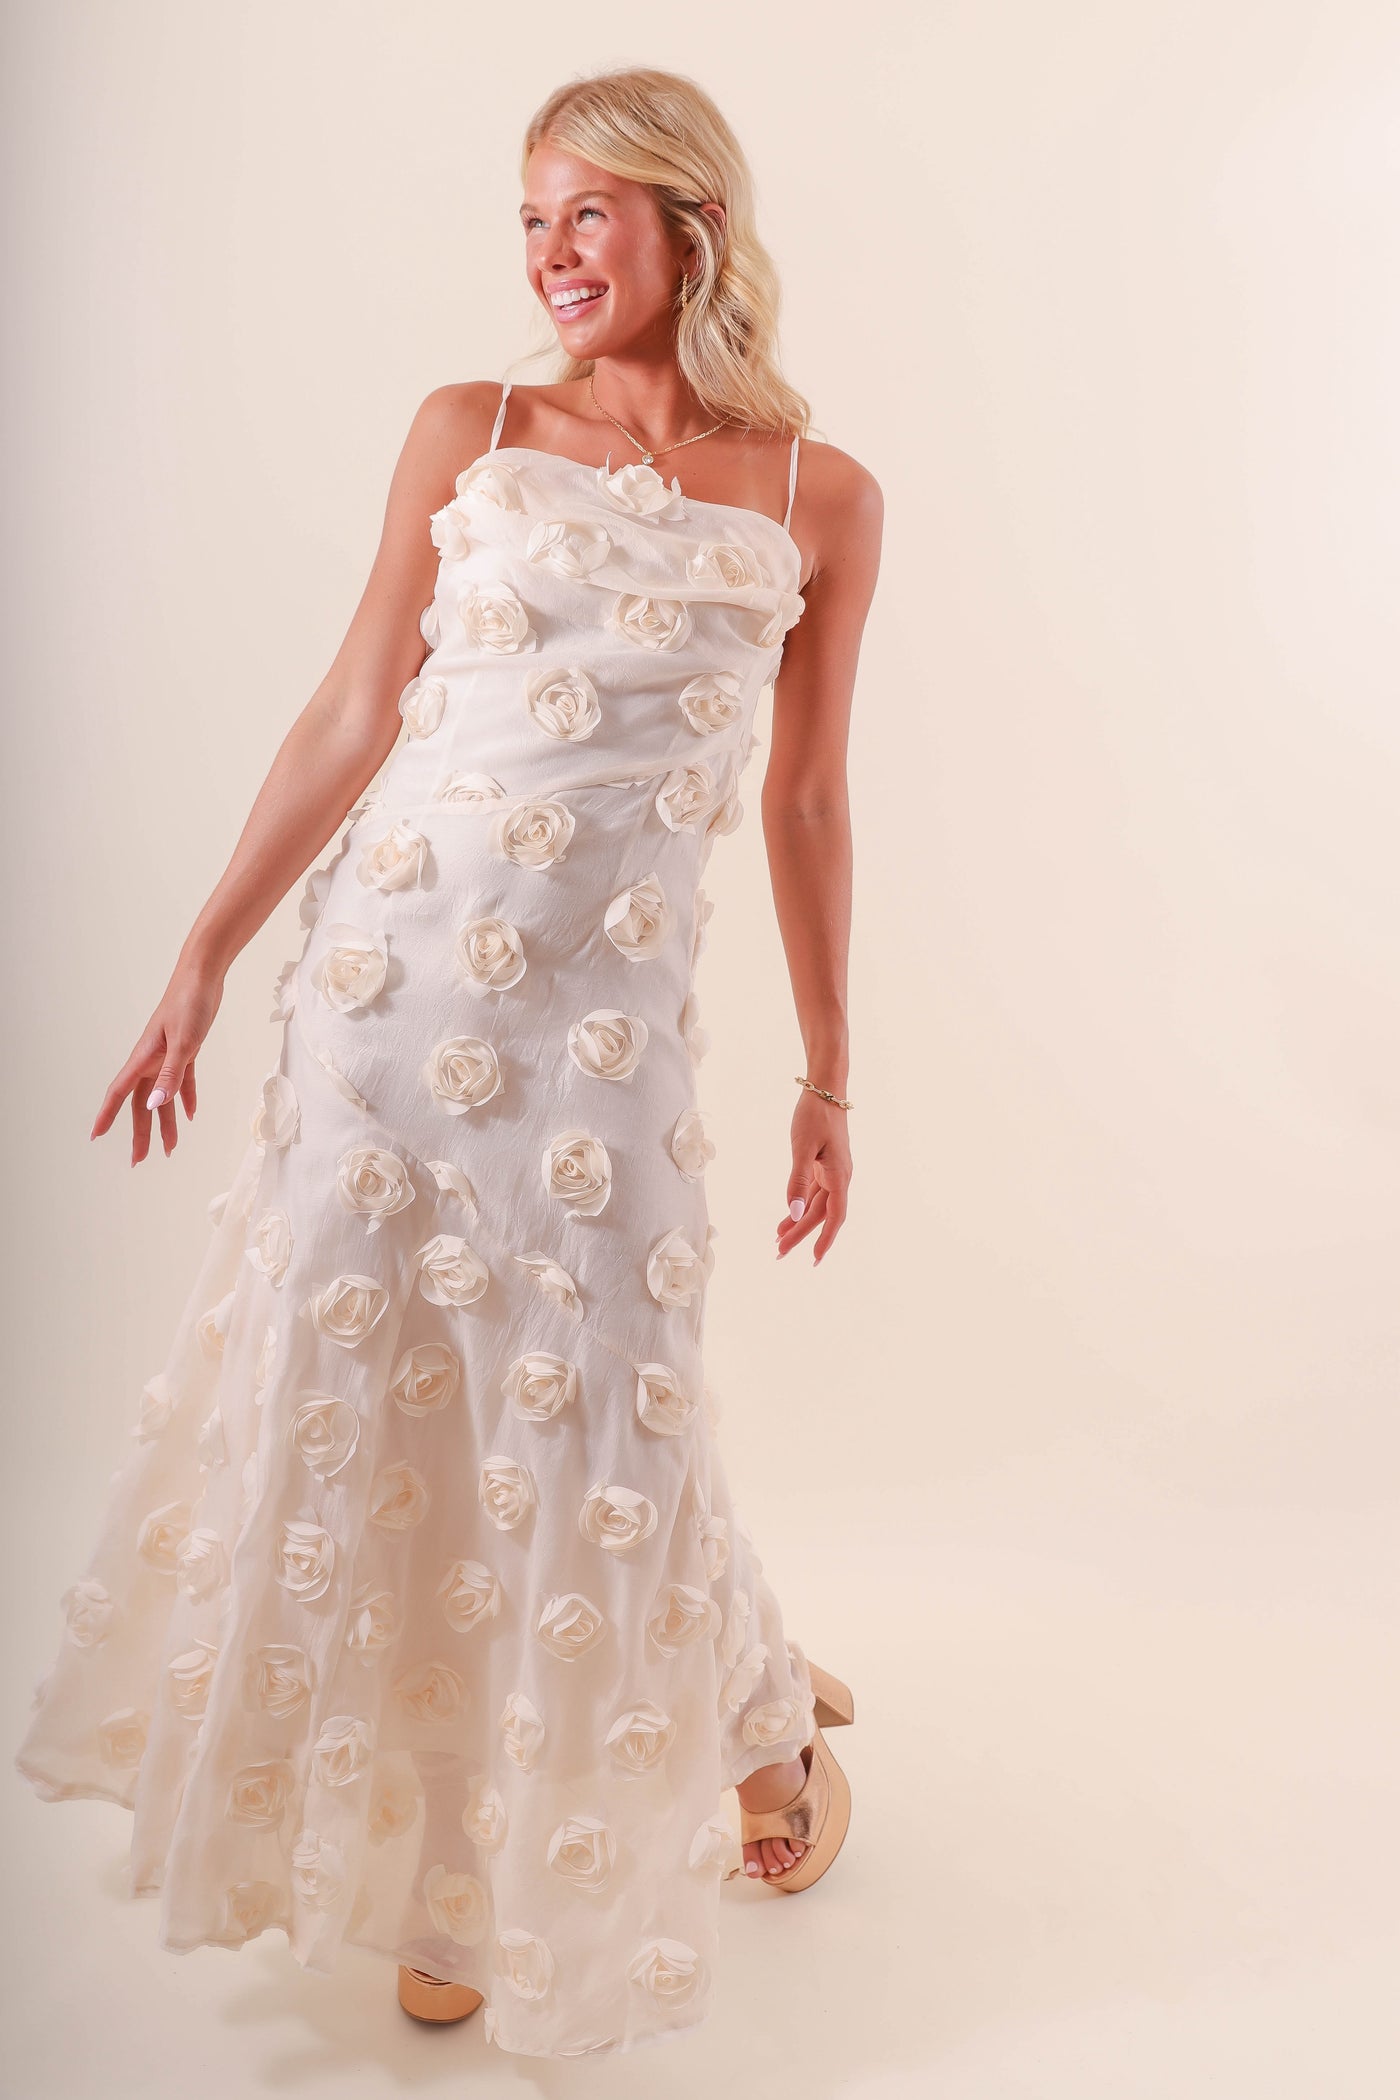 3D Roses Maxi Dress- Women's Formal Dresses- Bridal Dresses- Mable Rose Maxi